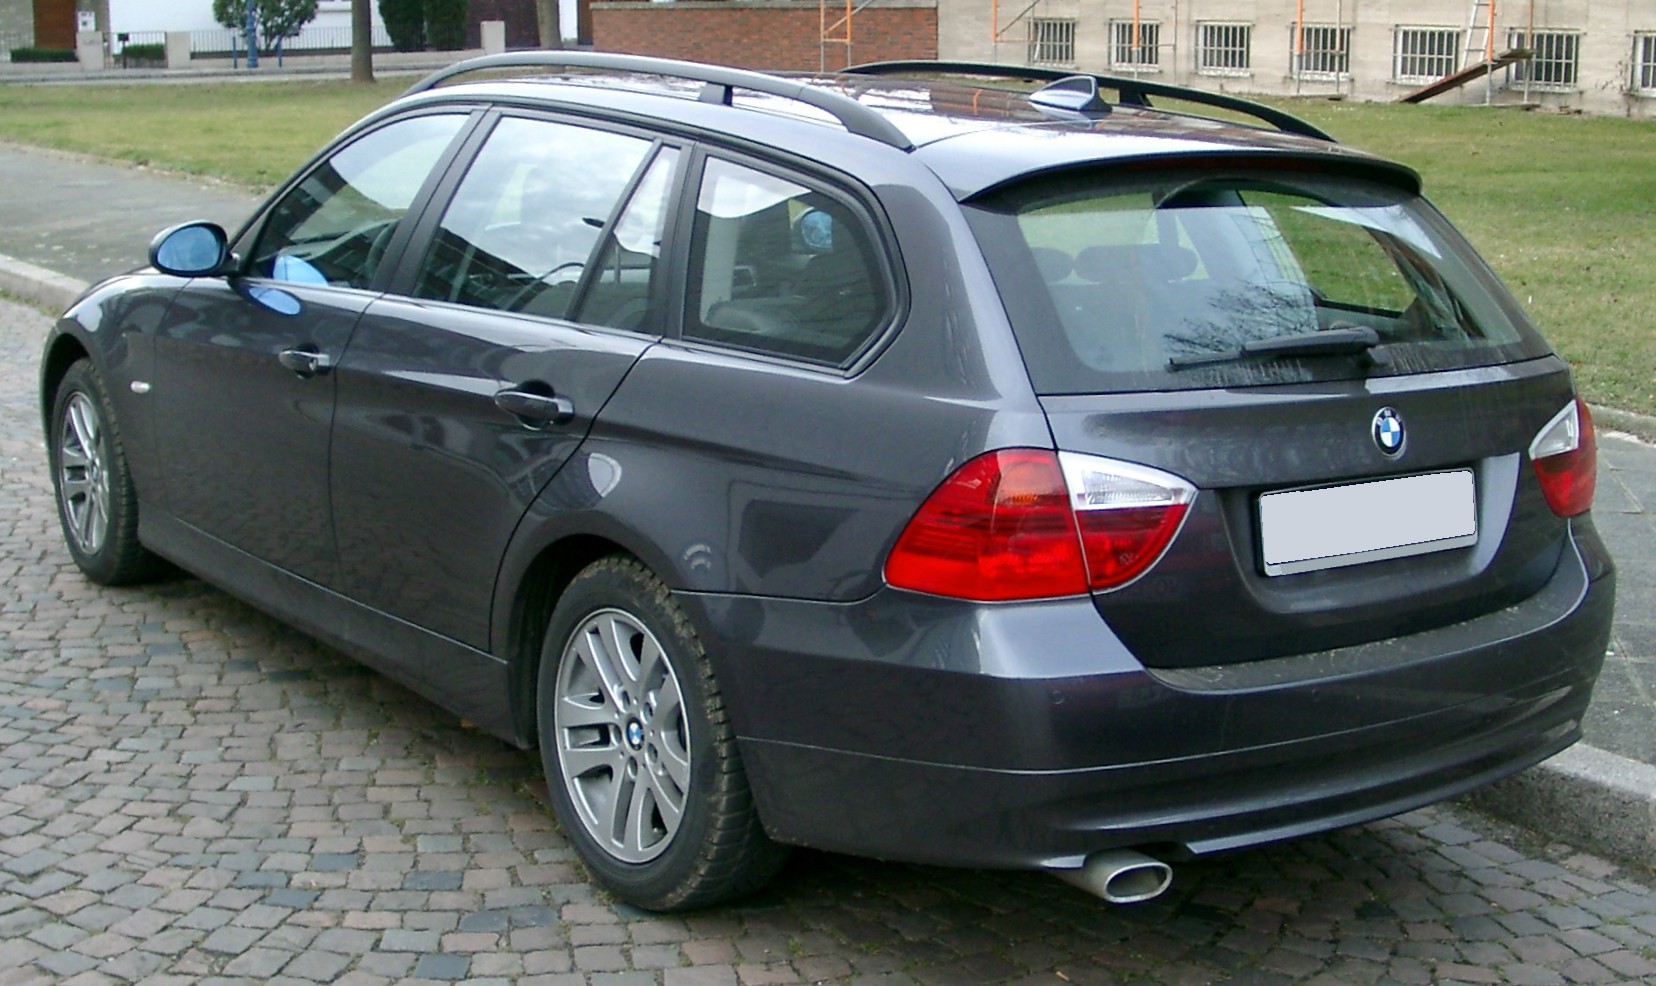 File:BMW E91 rear 20080215.jpg - Wikimedia Commons